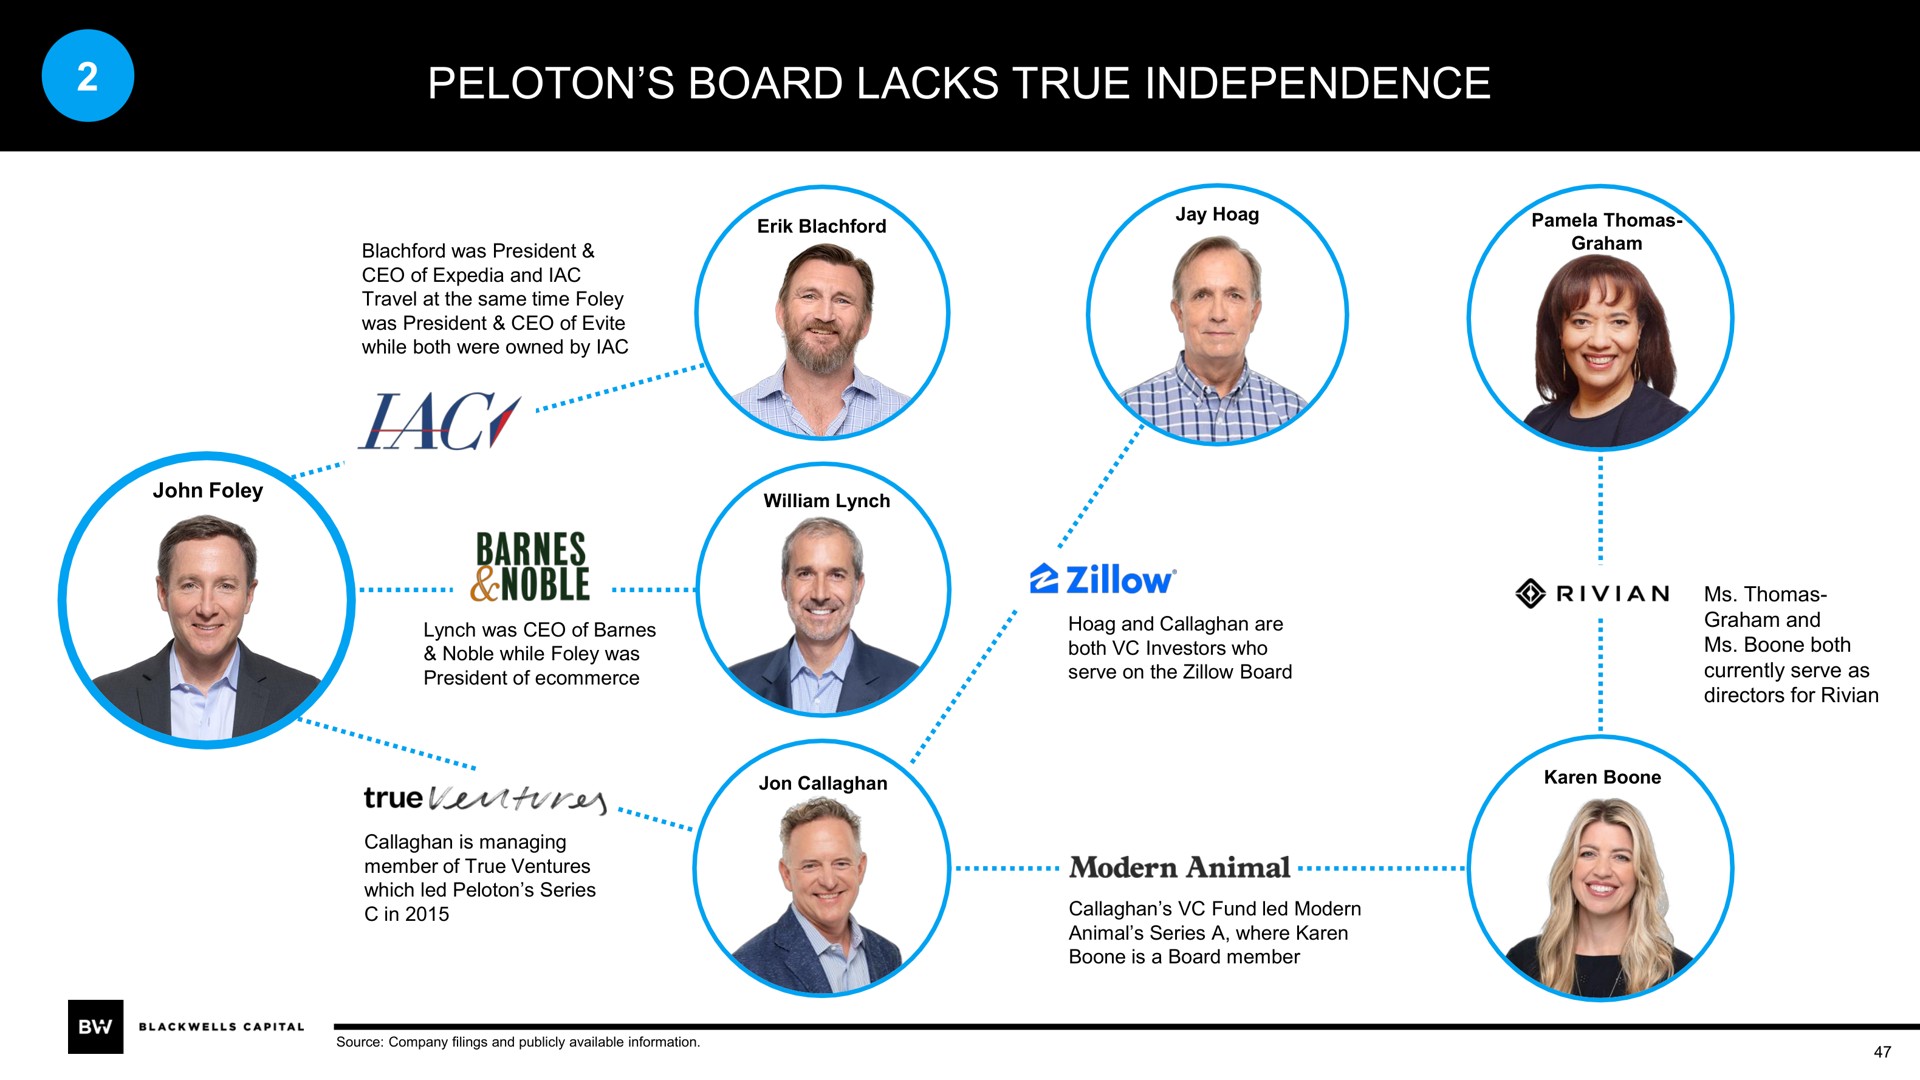 peloton board lacks true independence | Blackwells Capital